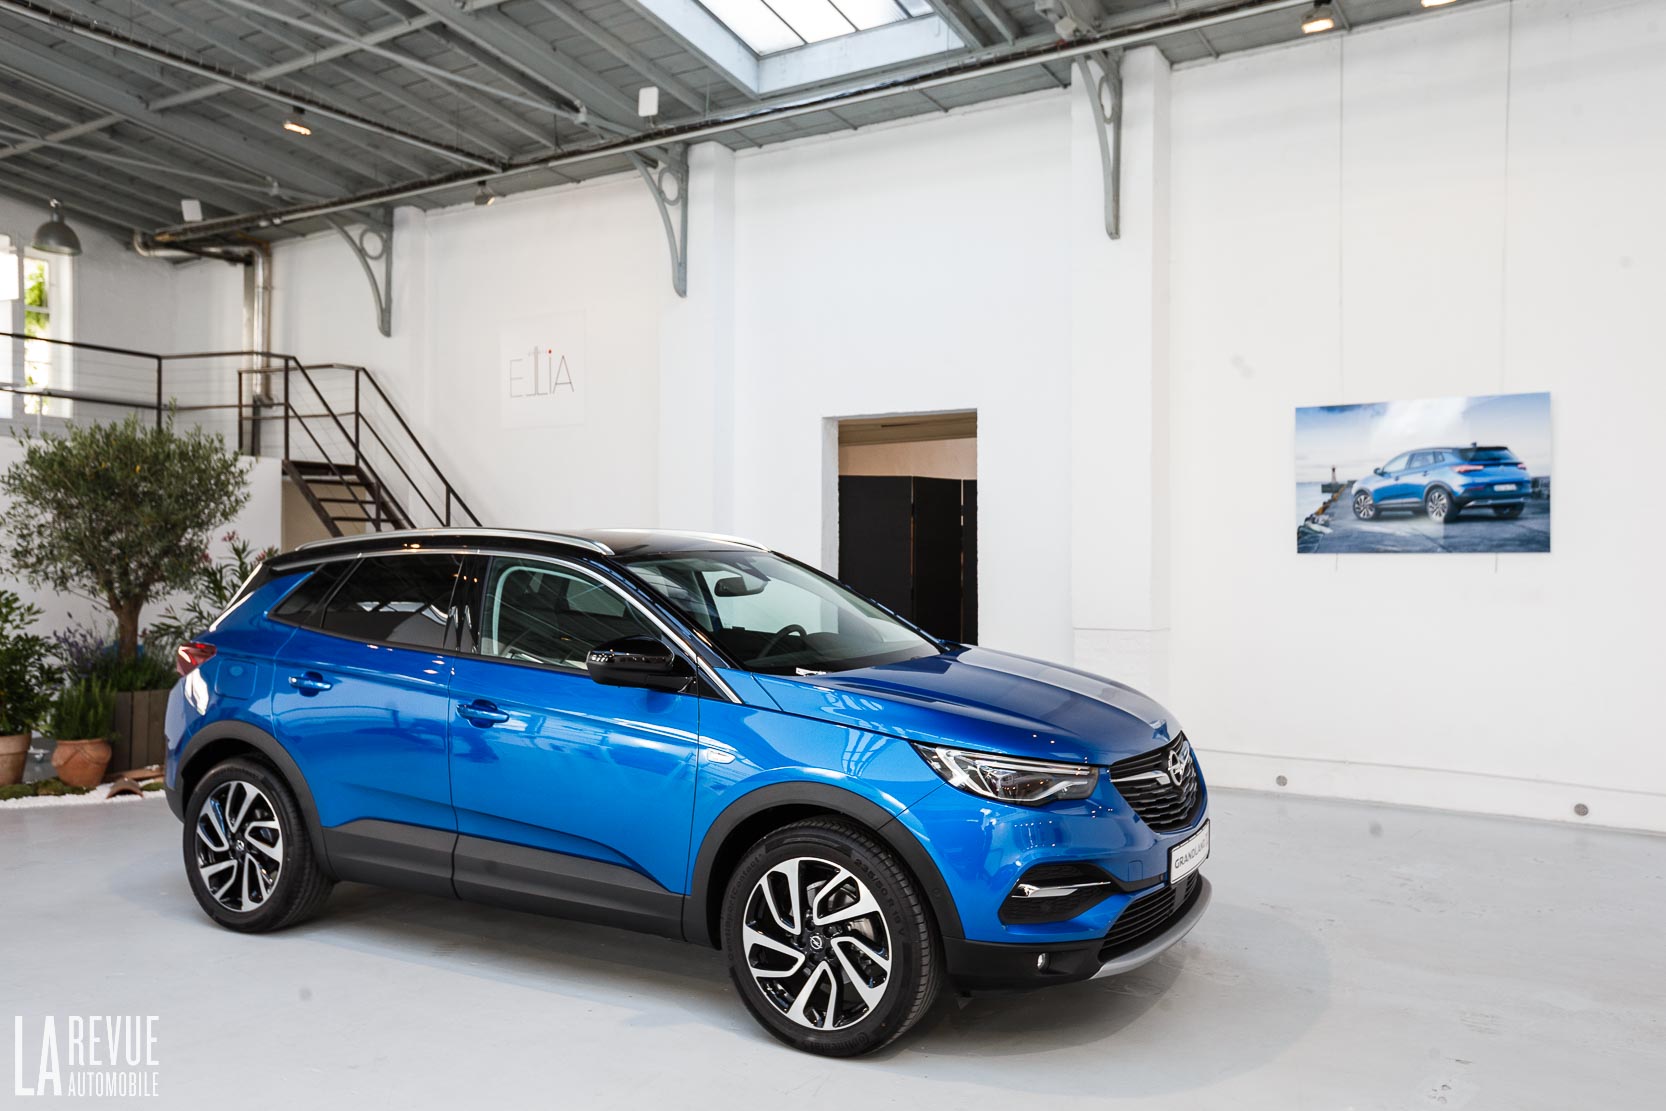 Image principale de l'actu: Infos et prix de l'Opel Grandland X avant son essai